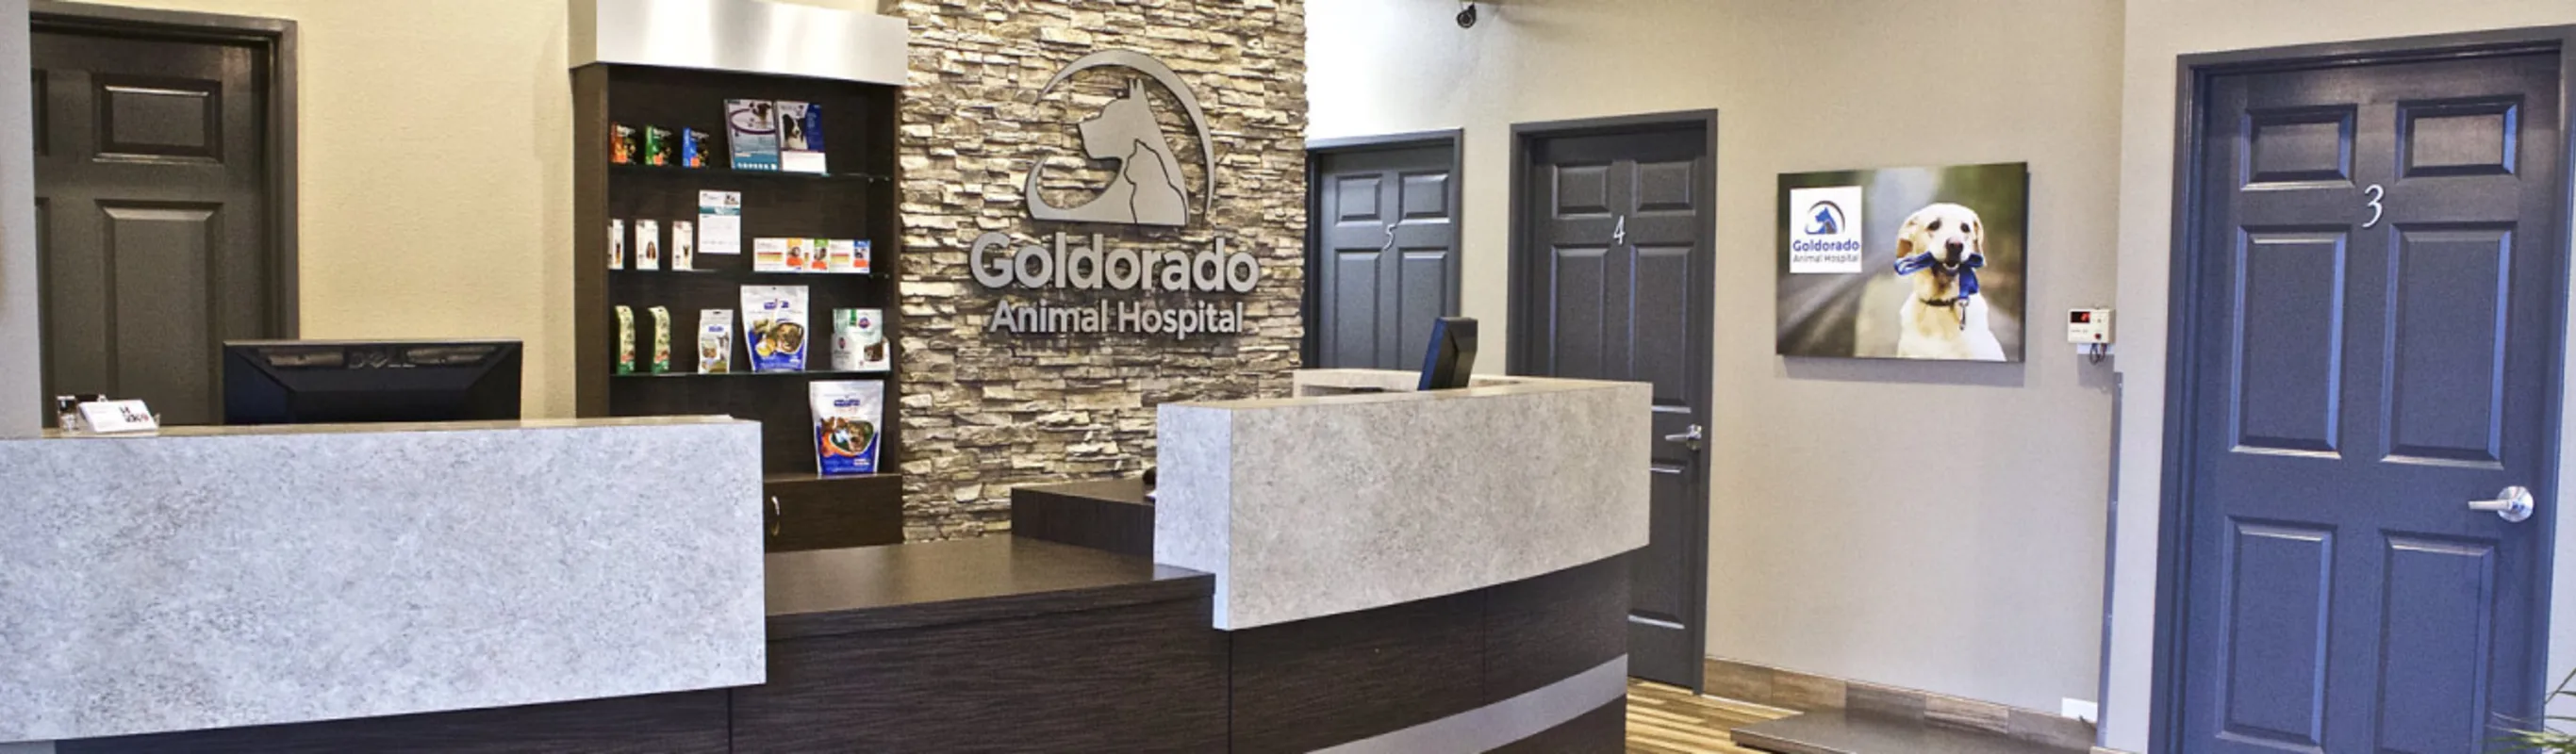 Reception desk at Goldorado Animal Hospital